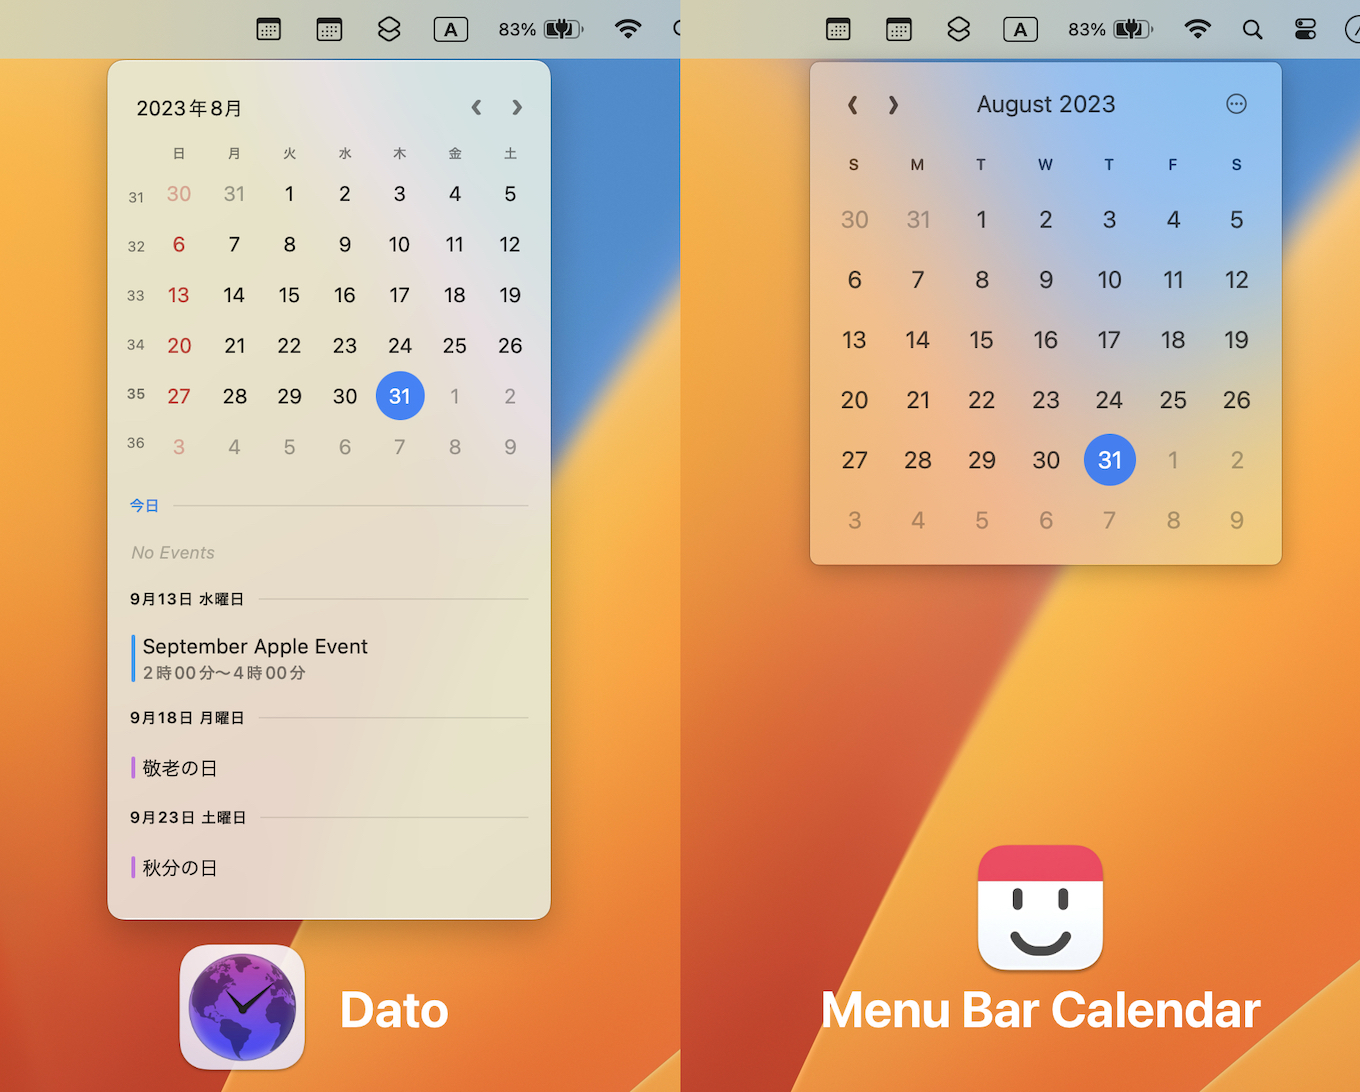 Dato and Menu Bar Calendar by Sindre Sorhus